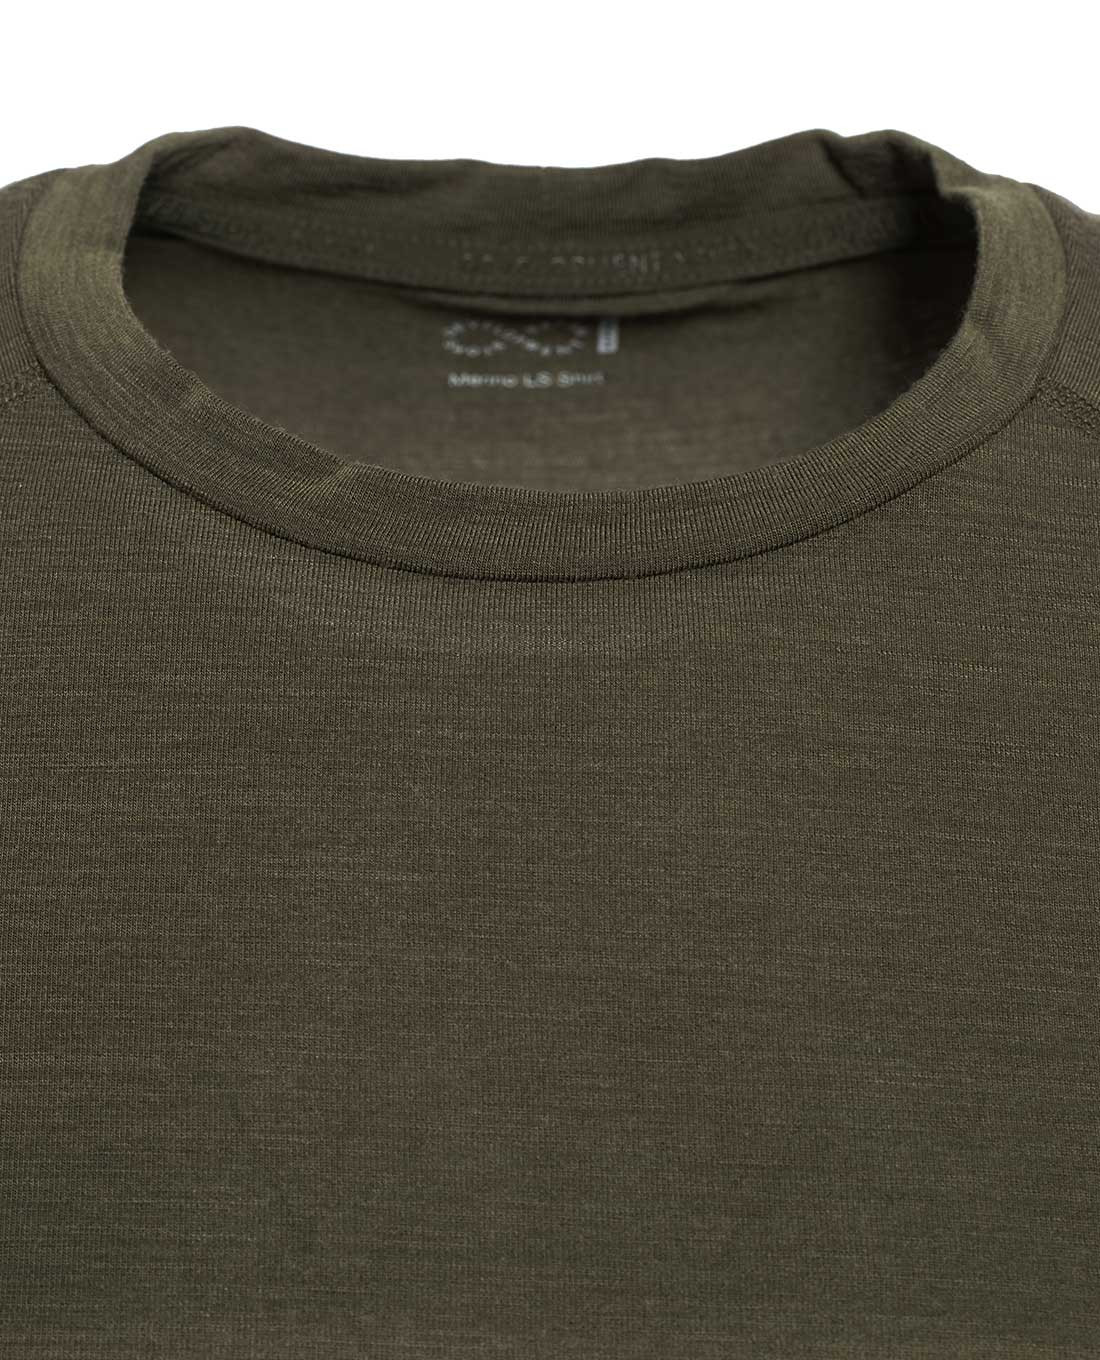 DNS Alpha Merino Slim LS Shirt Olive Green - 10001-00101 - TACWRK